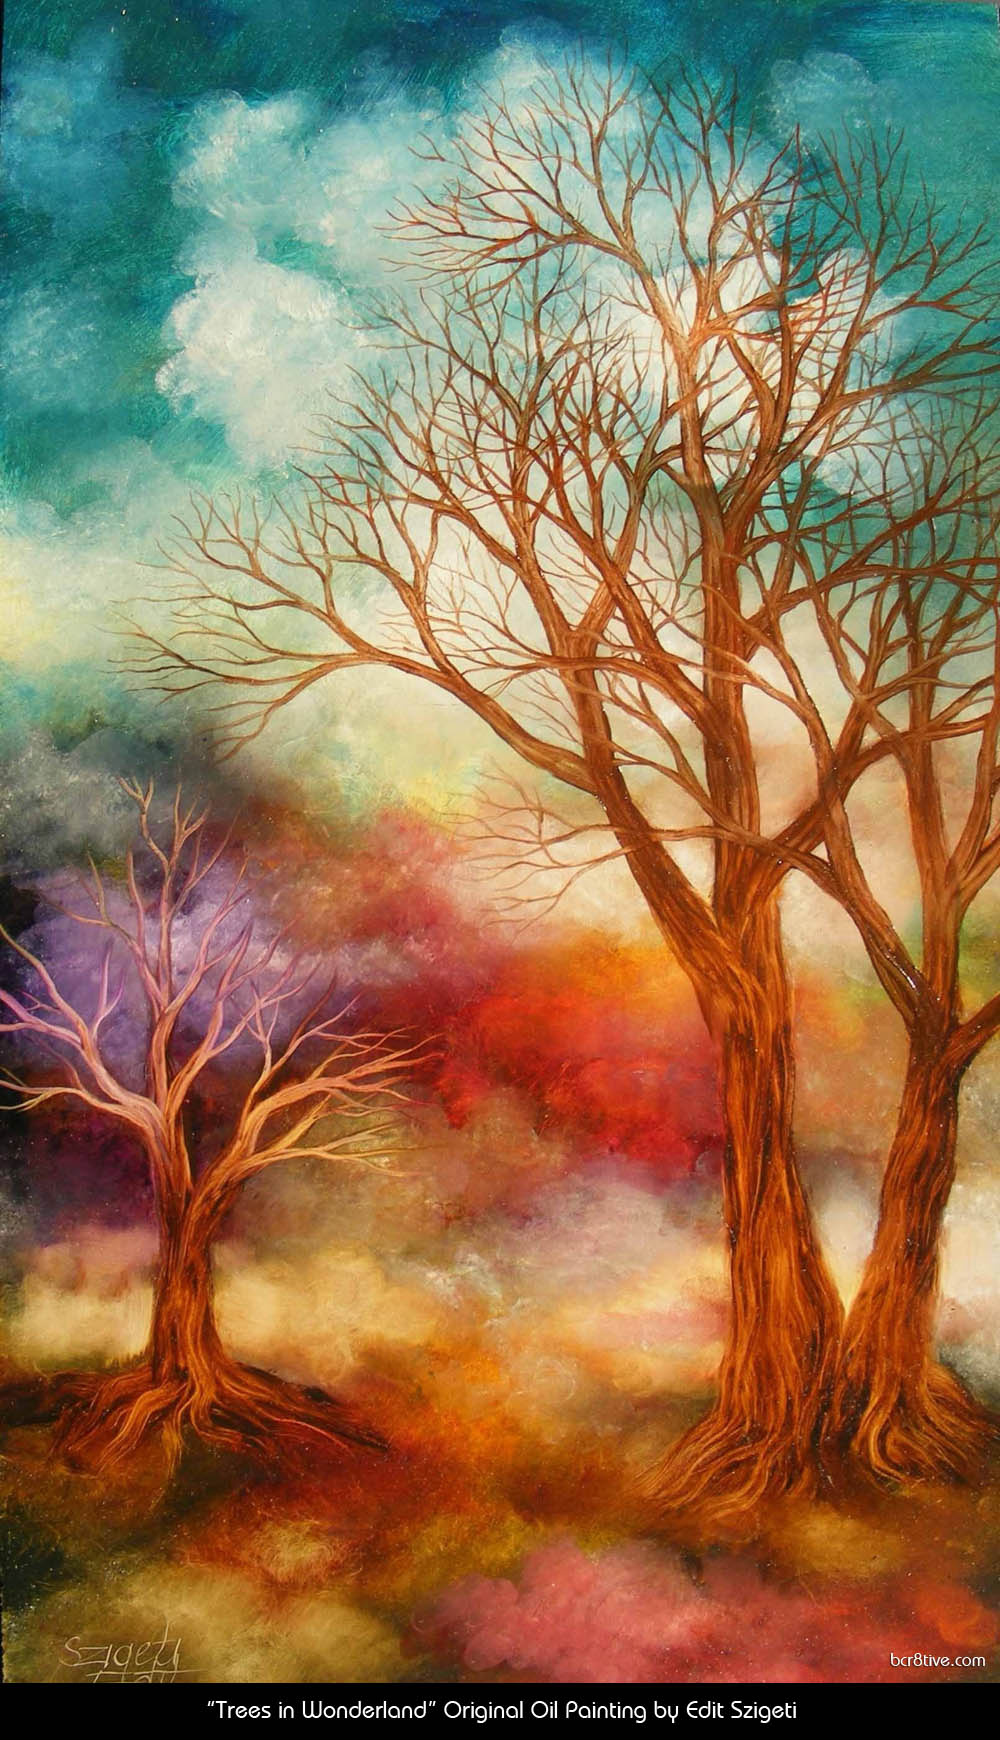 Edit Szigeti's "Trees in Wonderland"